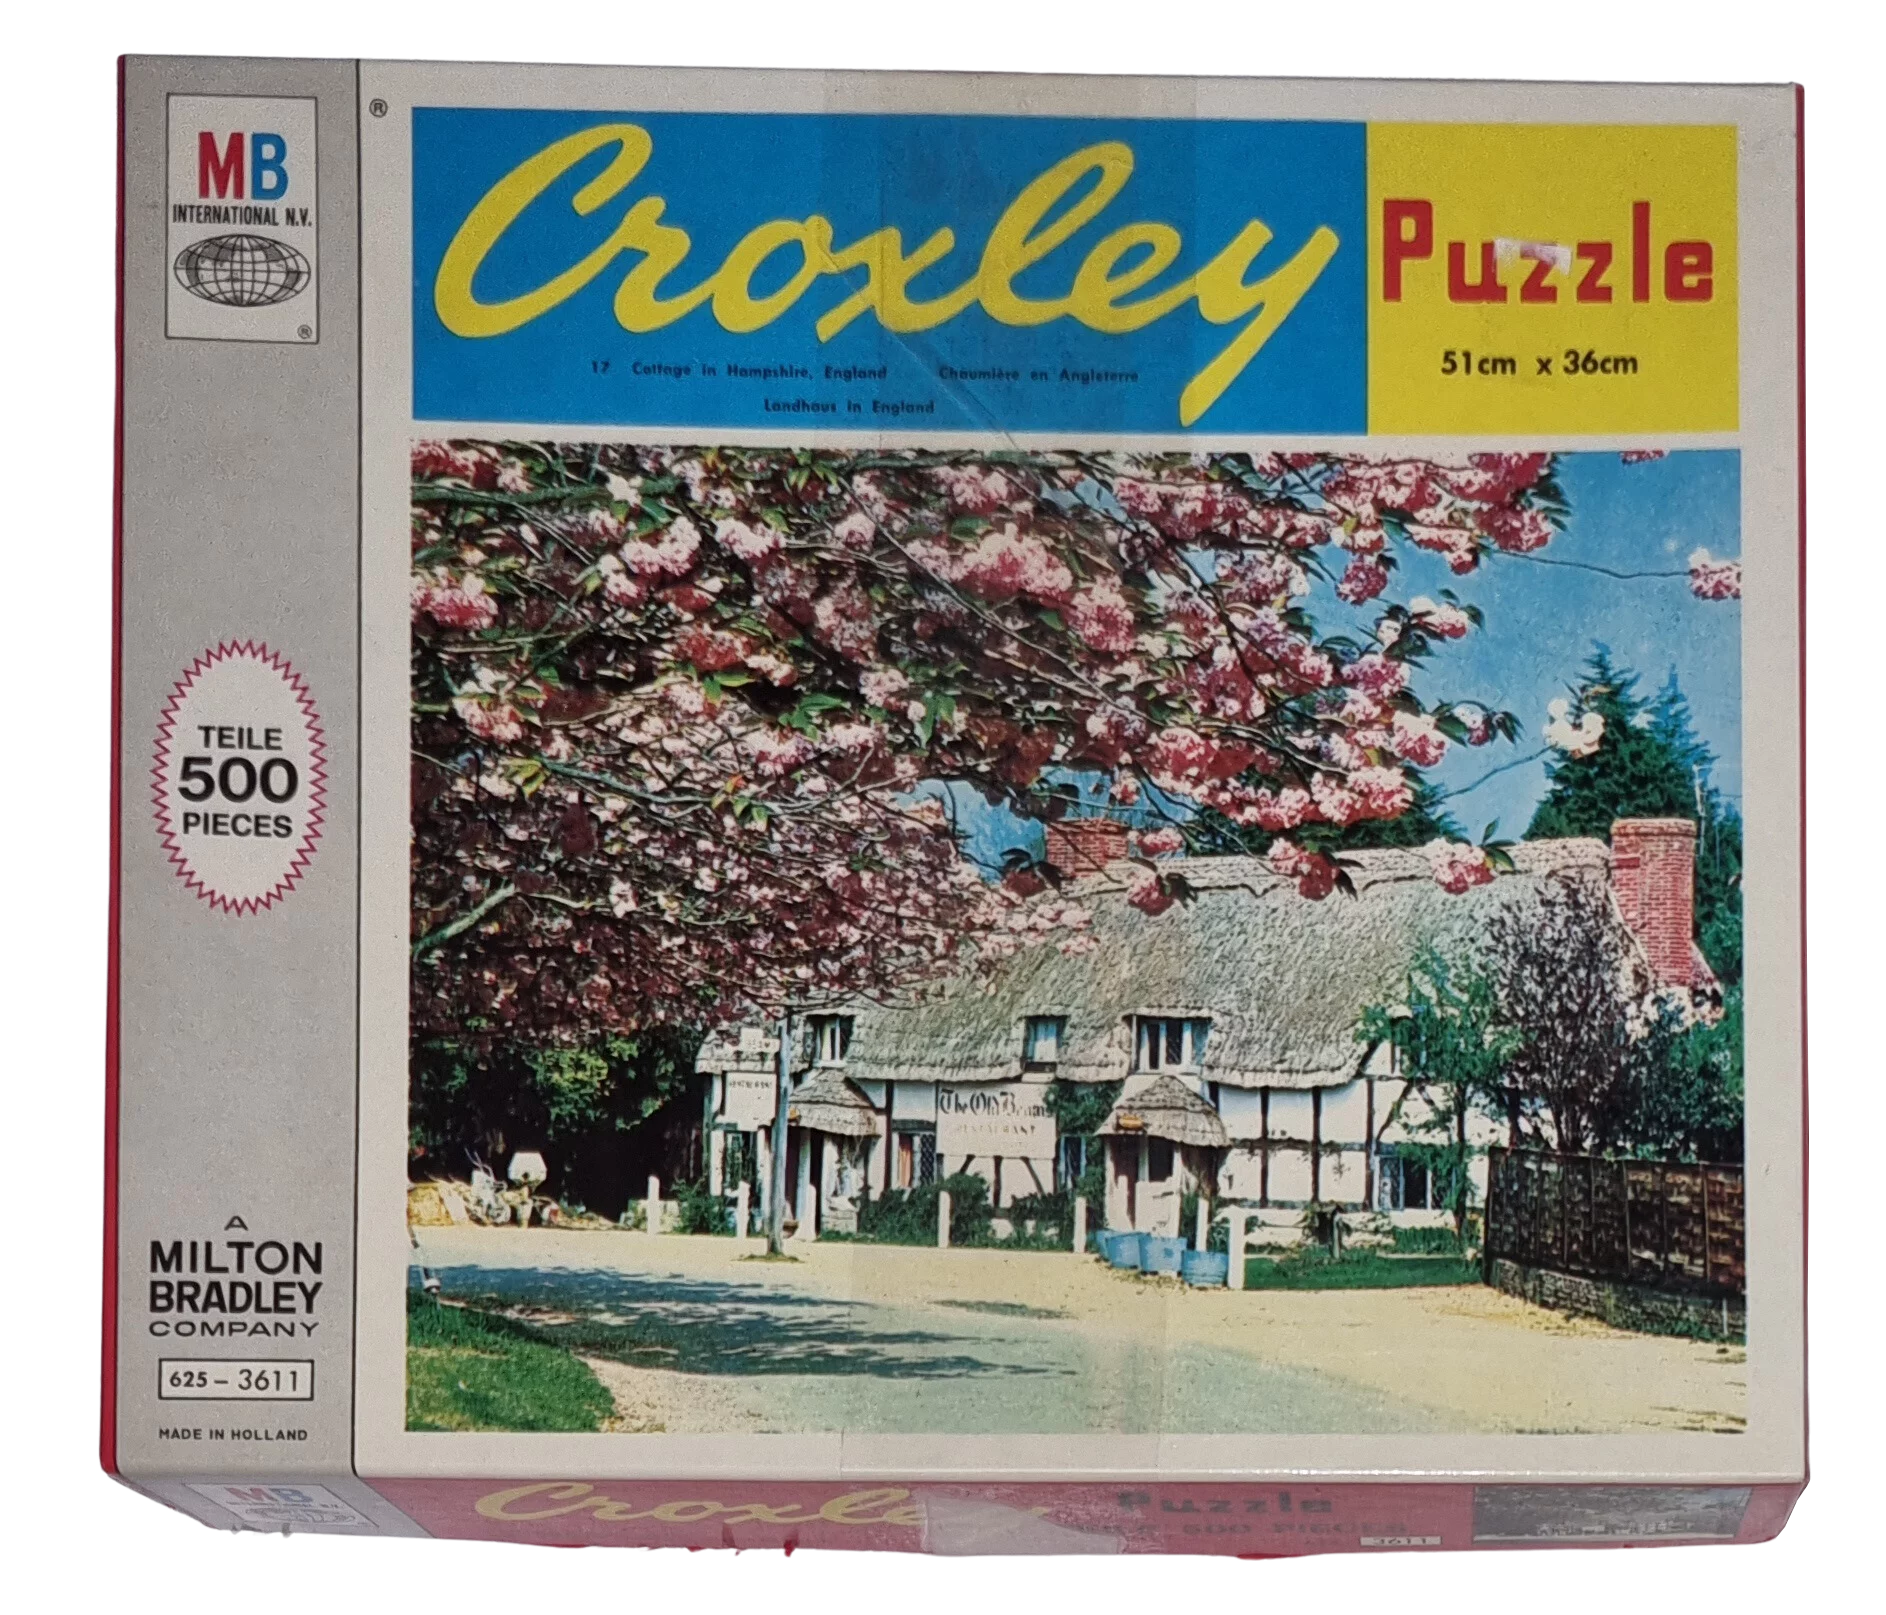 MB Croxley Puzzle 500 Teile 6253611 A Milton Bradley Company